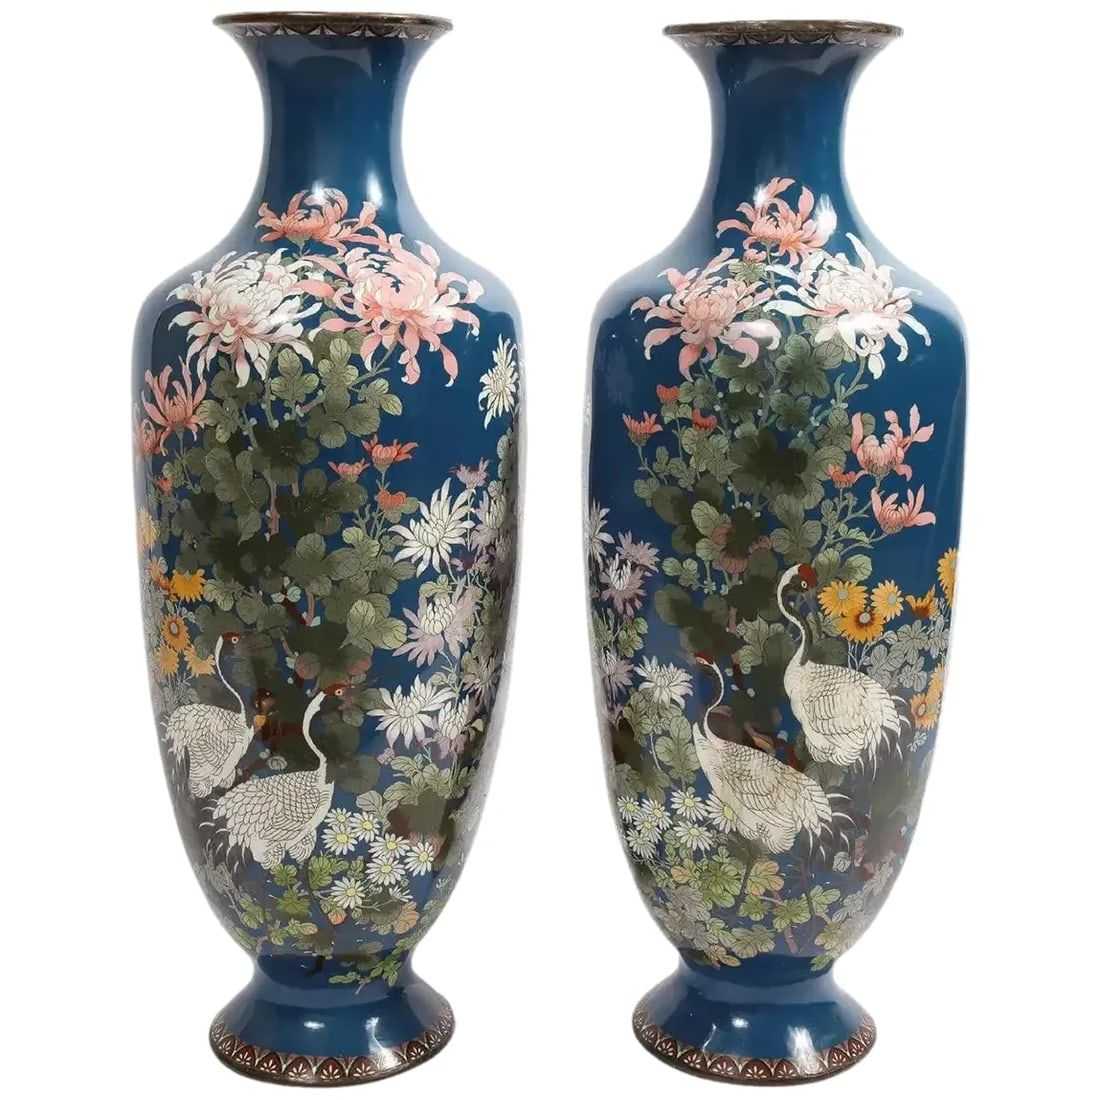 Japanese cloisonné art and vases win spotlight at Jasper52 May 15